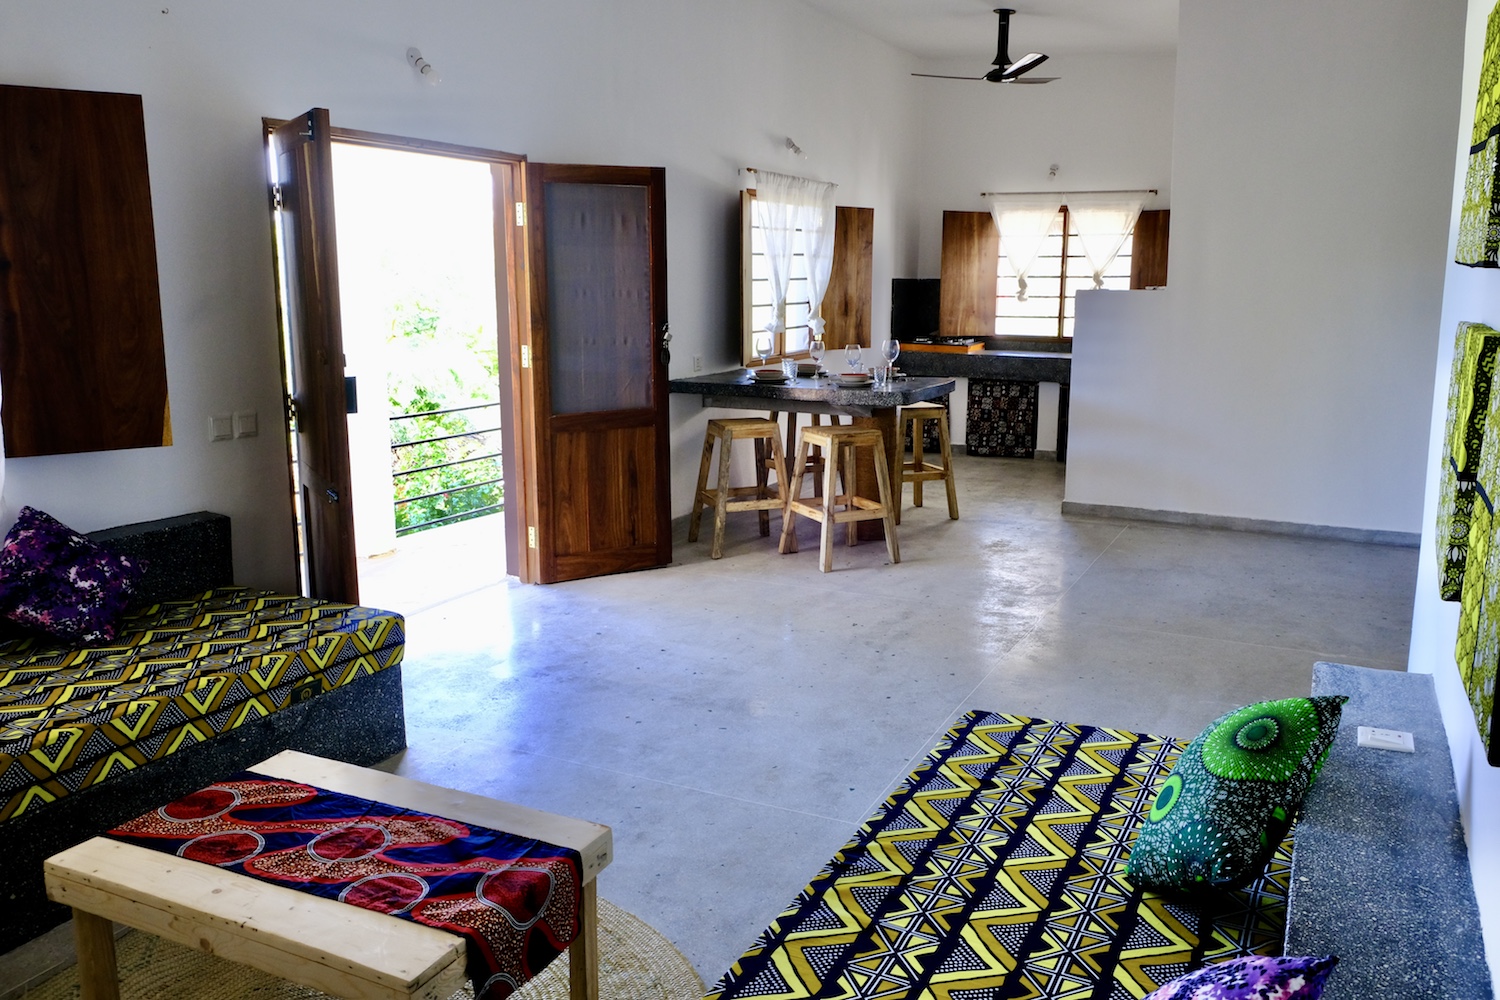 Our Zanzibar Group Nyumbani Residence kitchen dining area and doors out to veranda